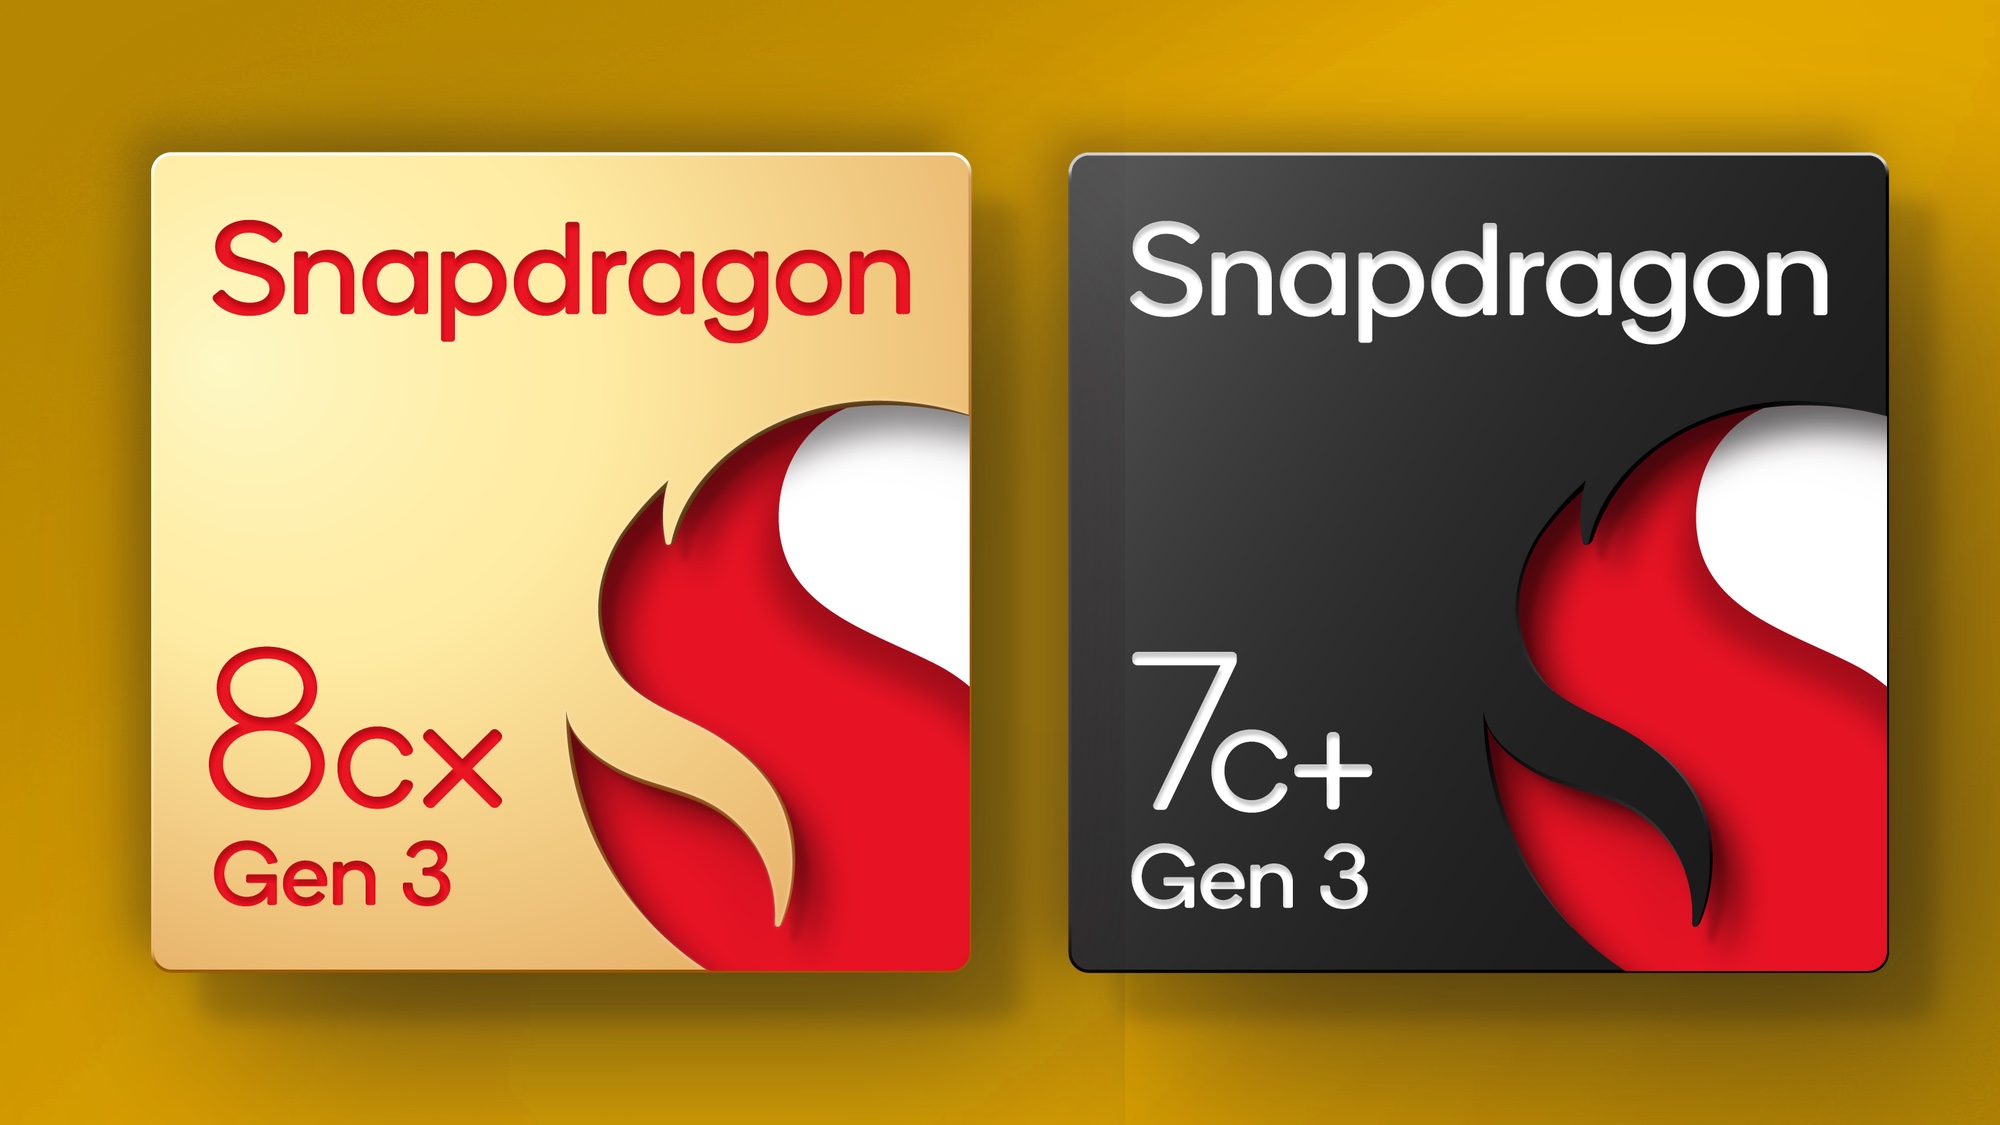 Snapdragon 8cx Gen 3 Pro: Unleashing Pro-Level Performance